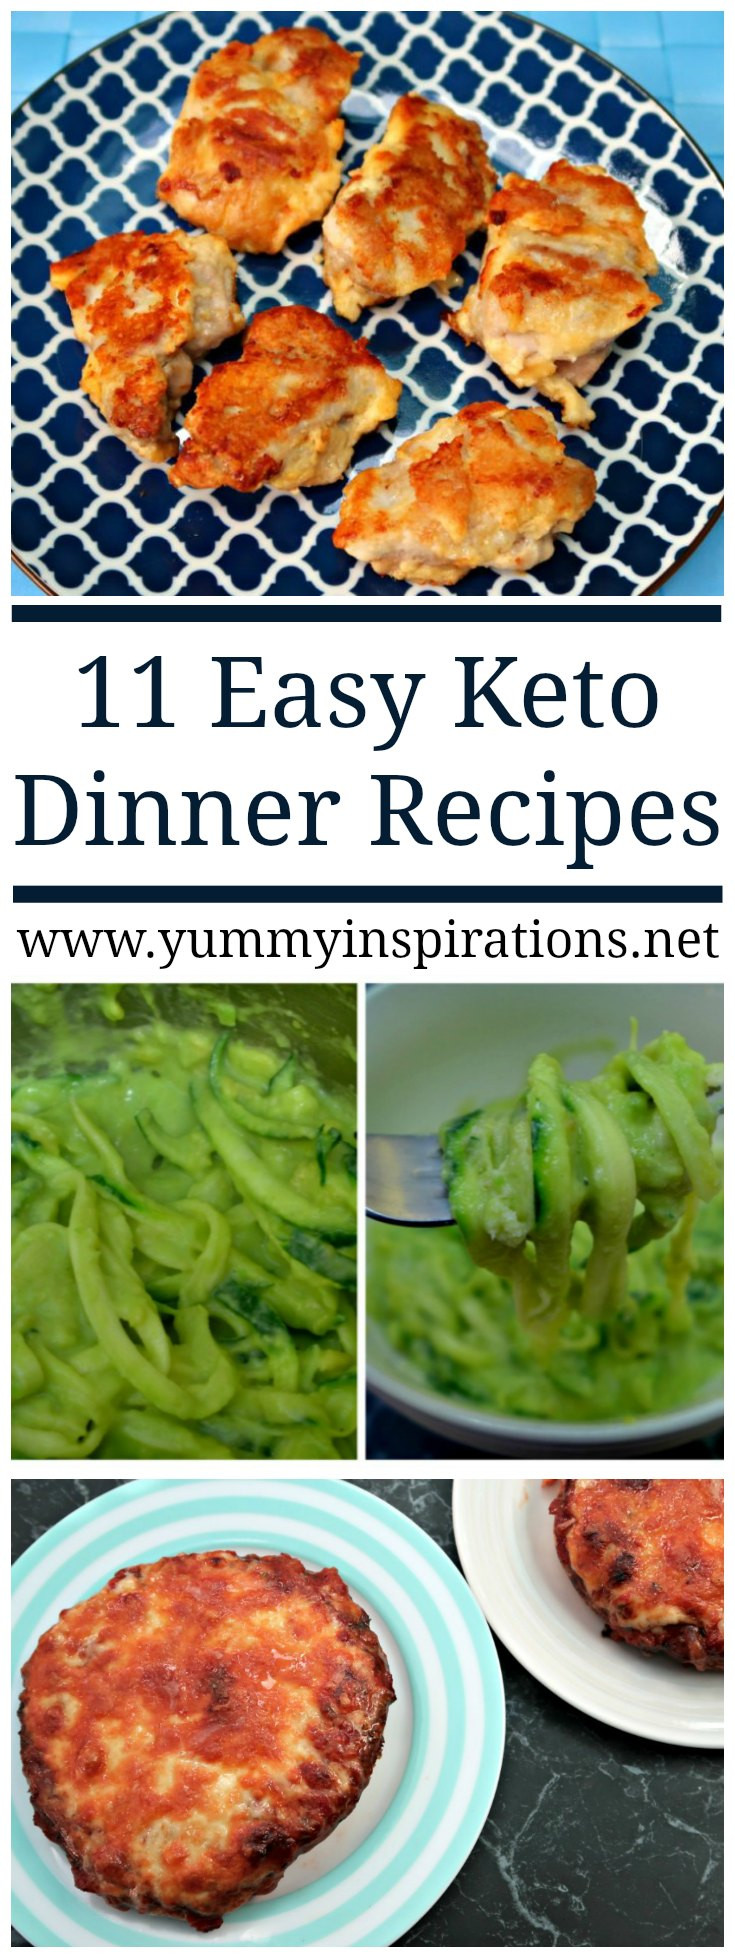 Keto Dinner Recipes Easy
 11 Easy Keto Dinner Recipes Quick Low Carb Ketogenic